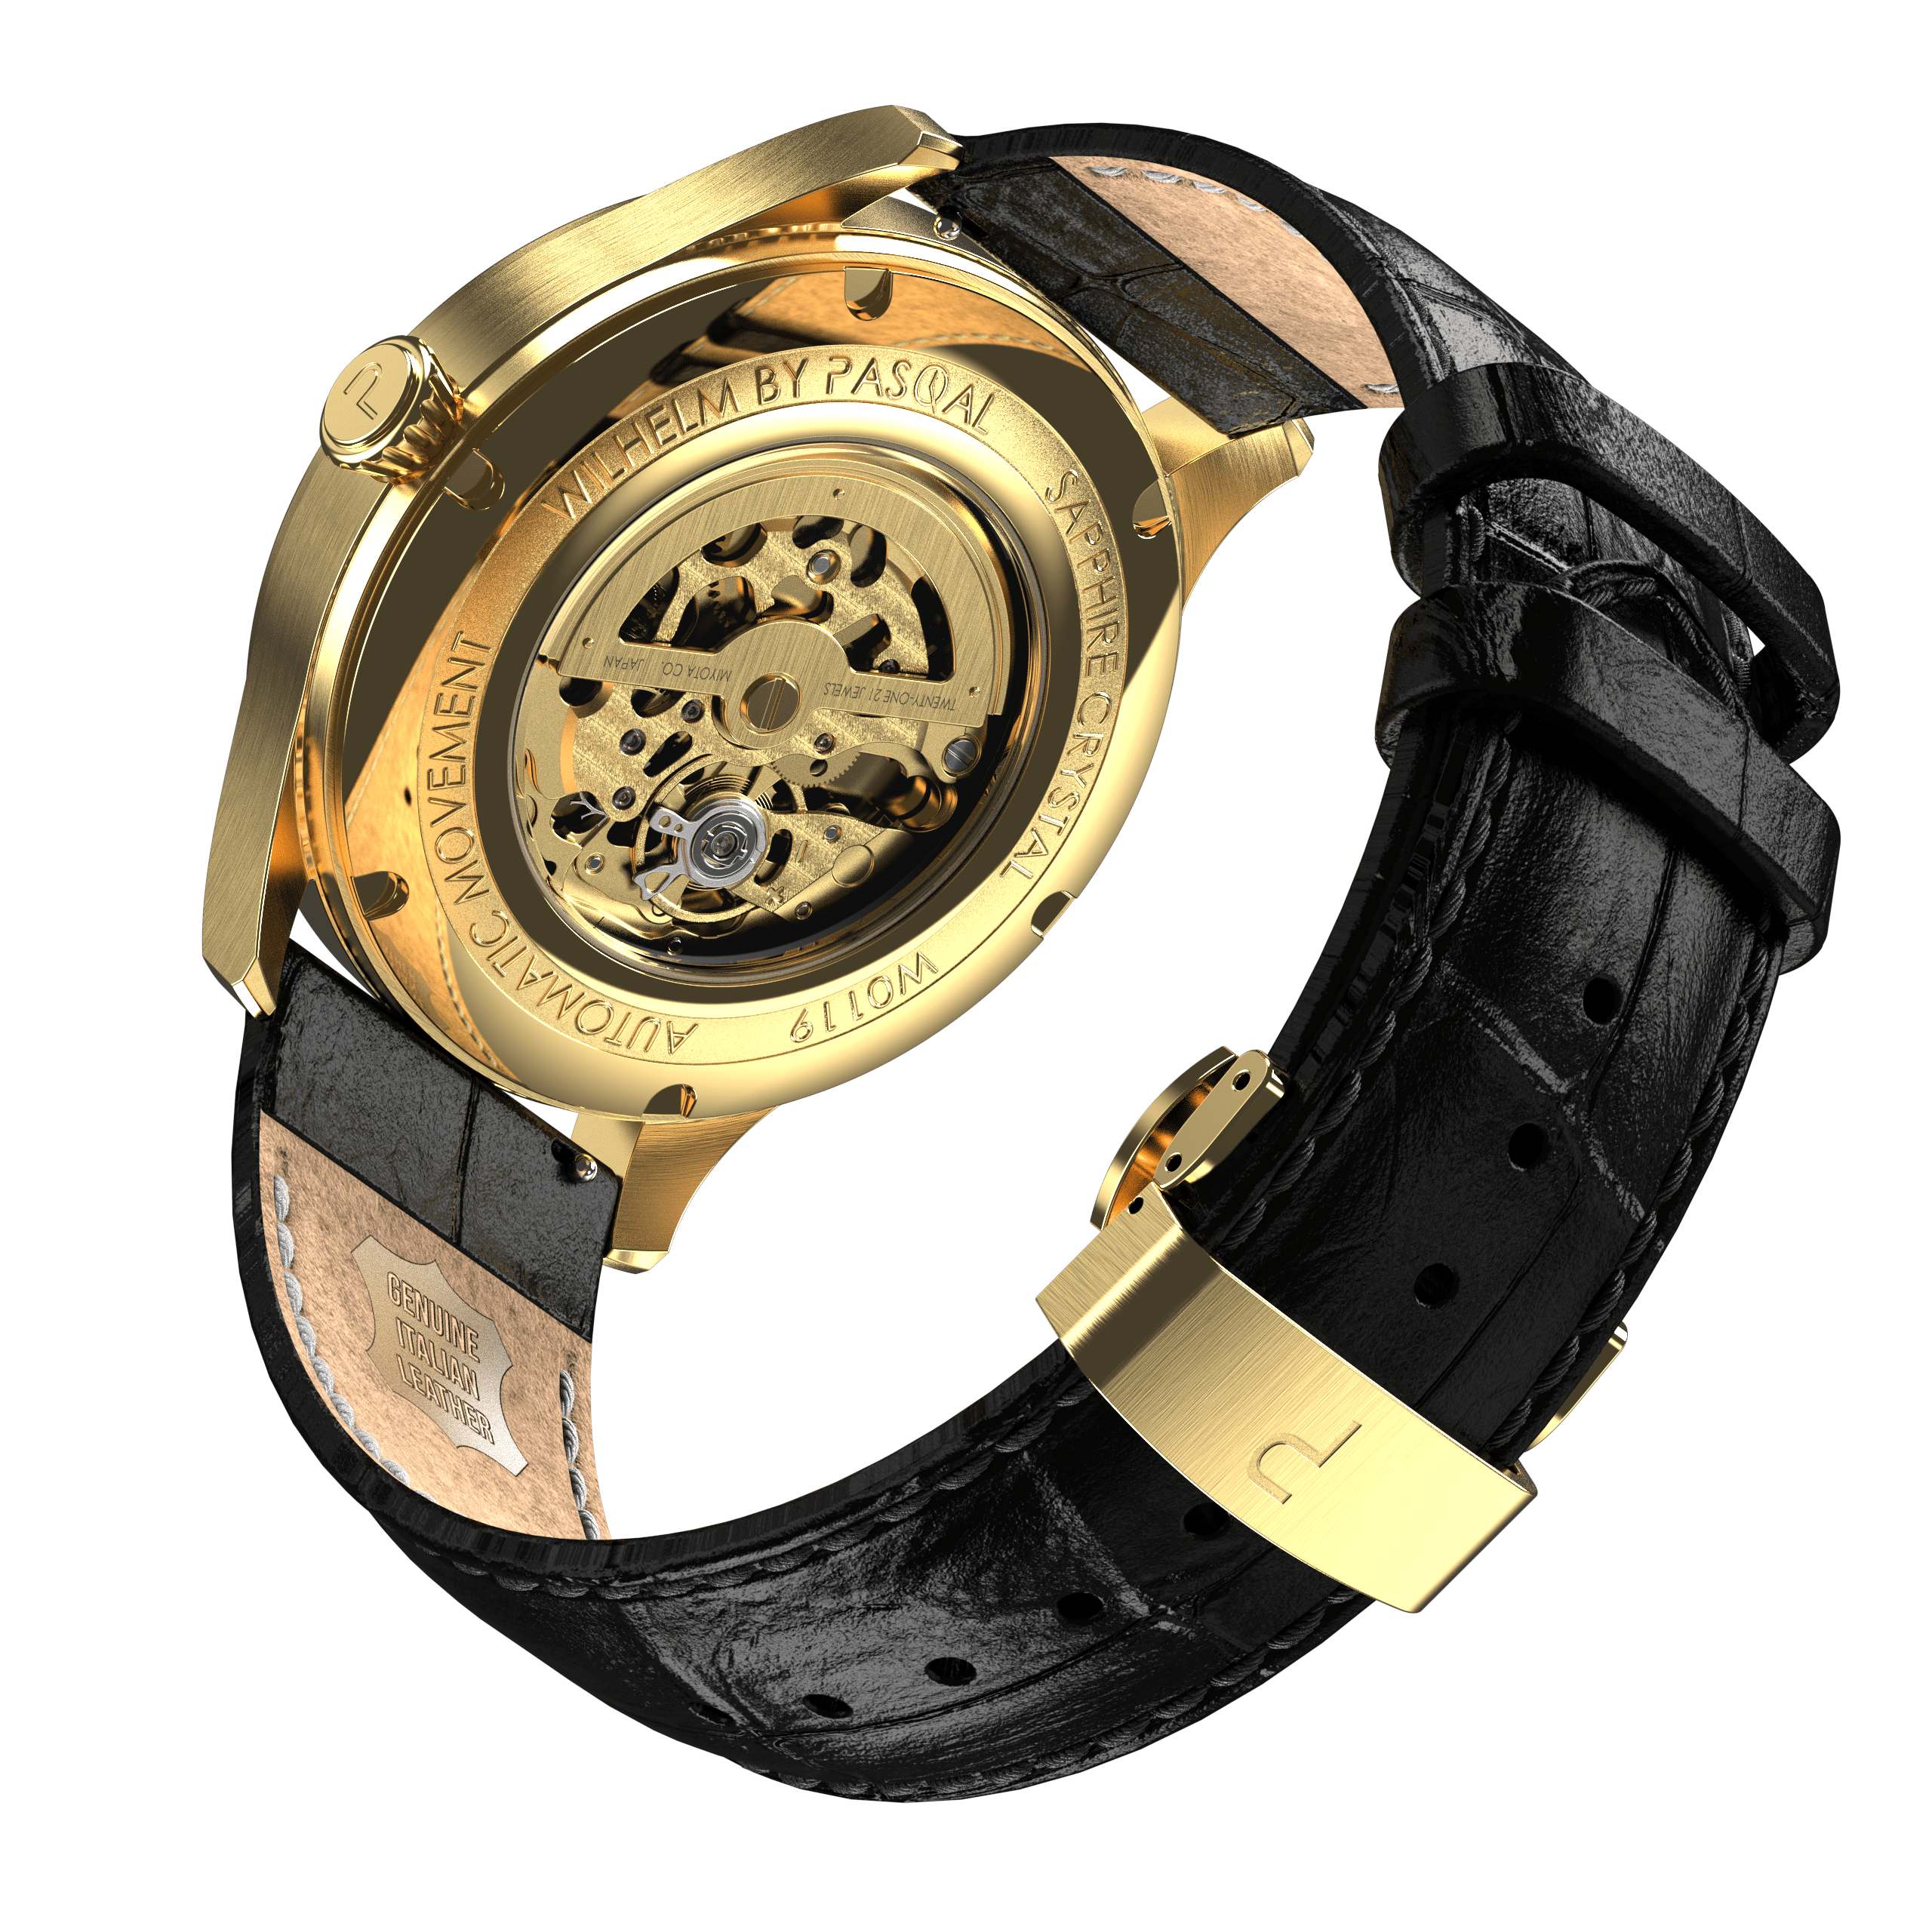 Wilhelm 42 Gold/Green - Pasqal Watches